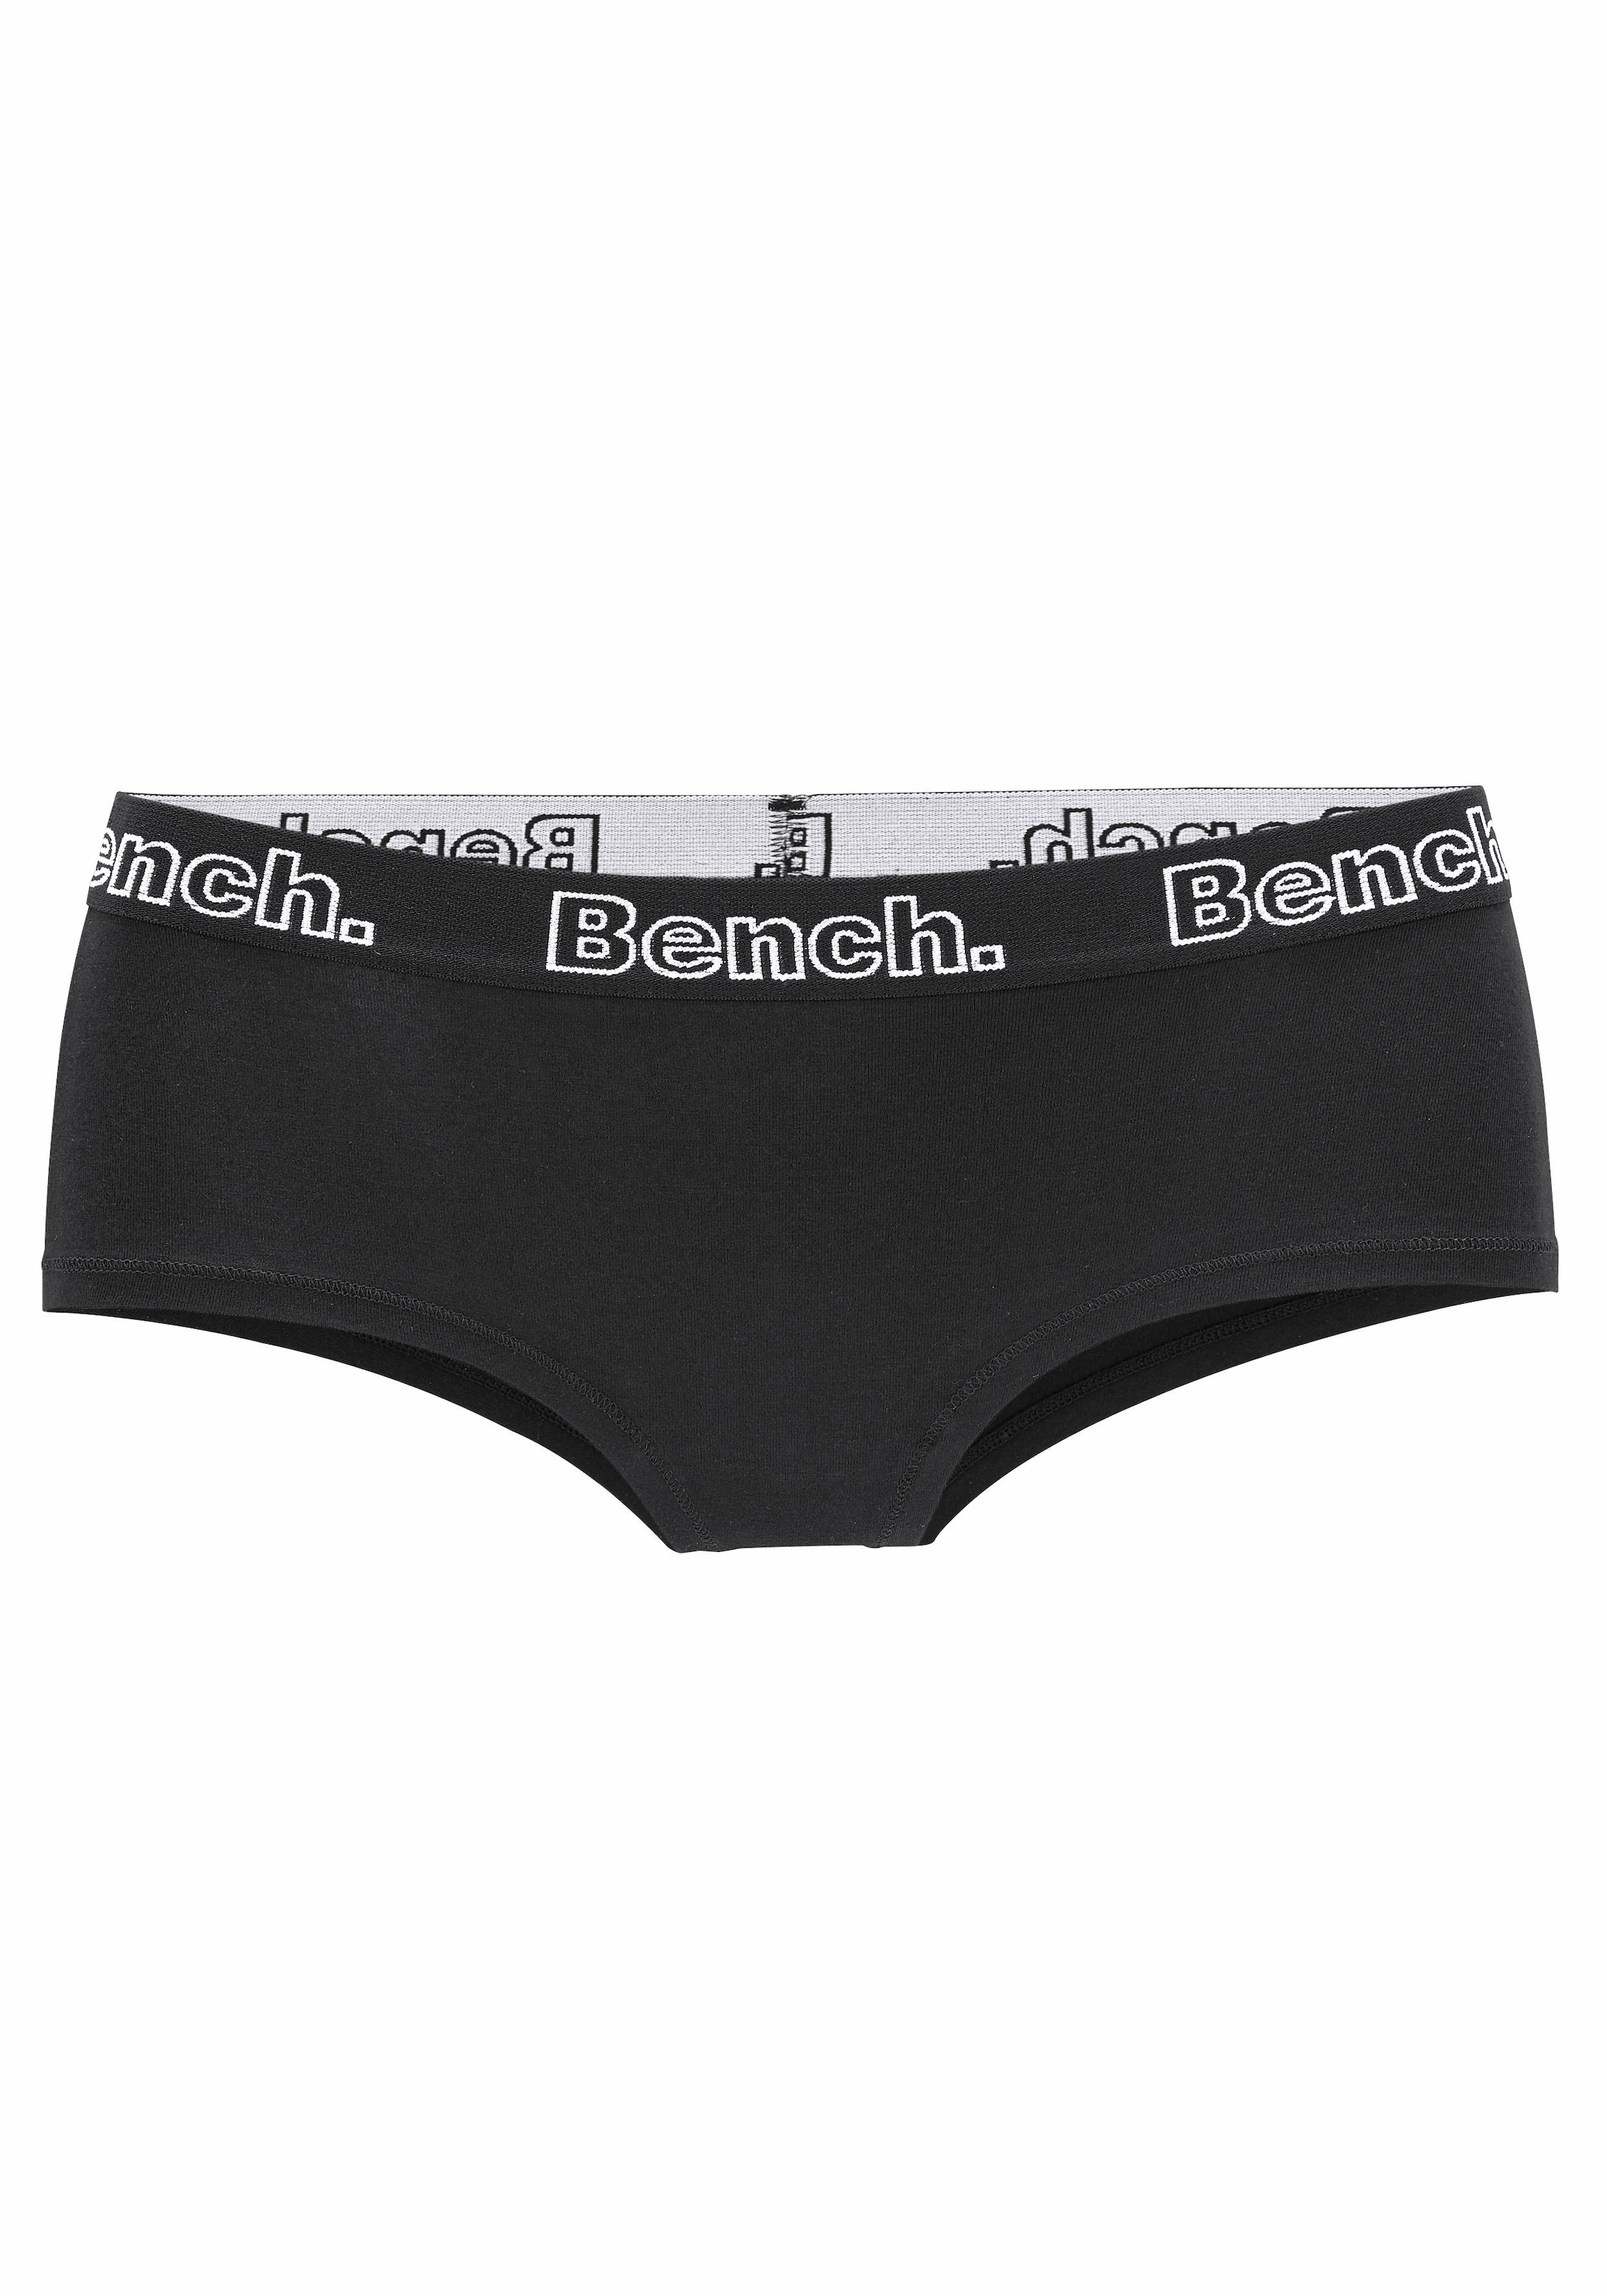 ✌ Bench. Panty, Webbund Acheter mit ligne Logo 3 St.), en (Packung, schwarzem